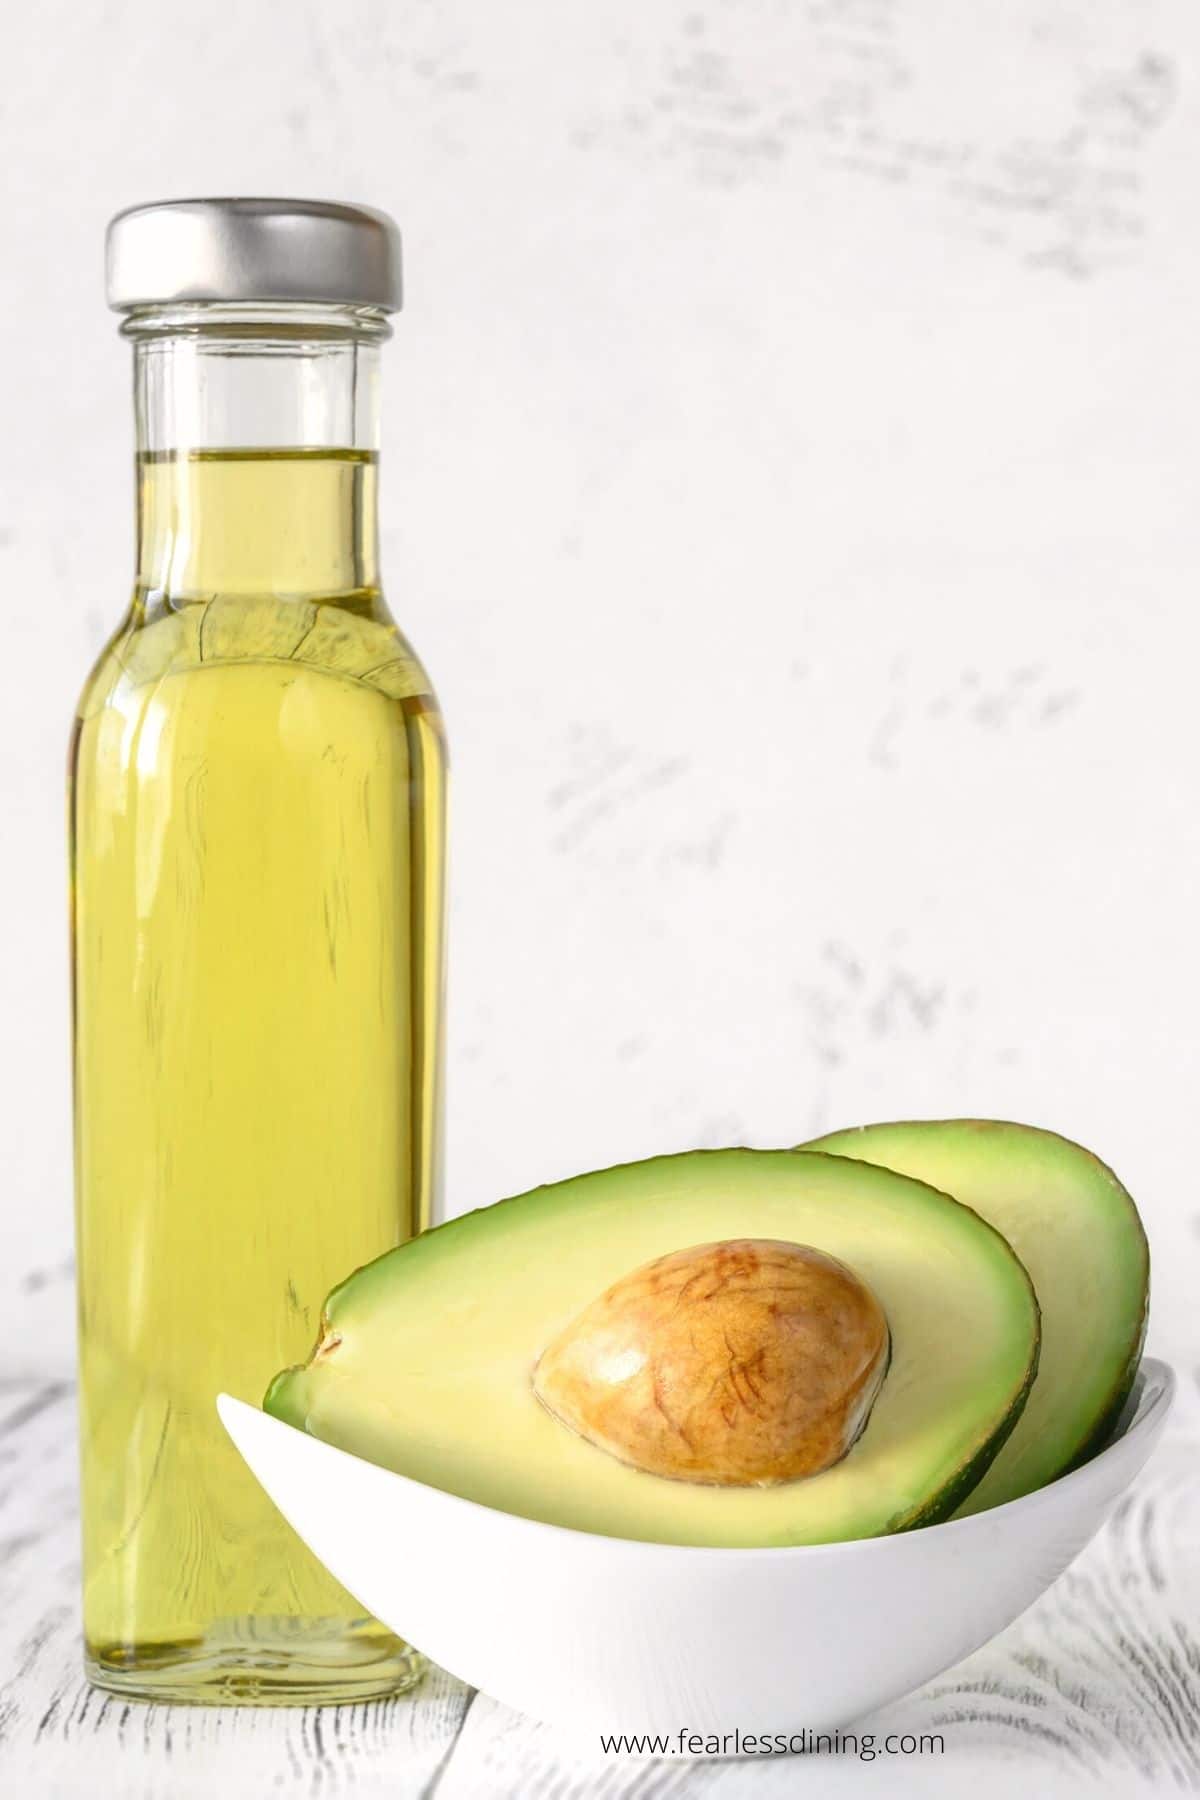 A bottle of avocado oil next to a bowl of avocados.